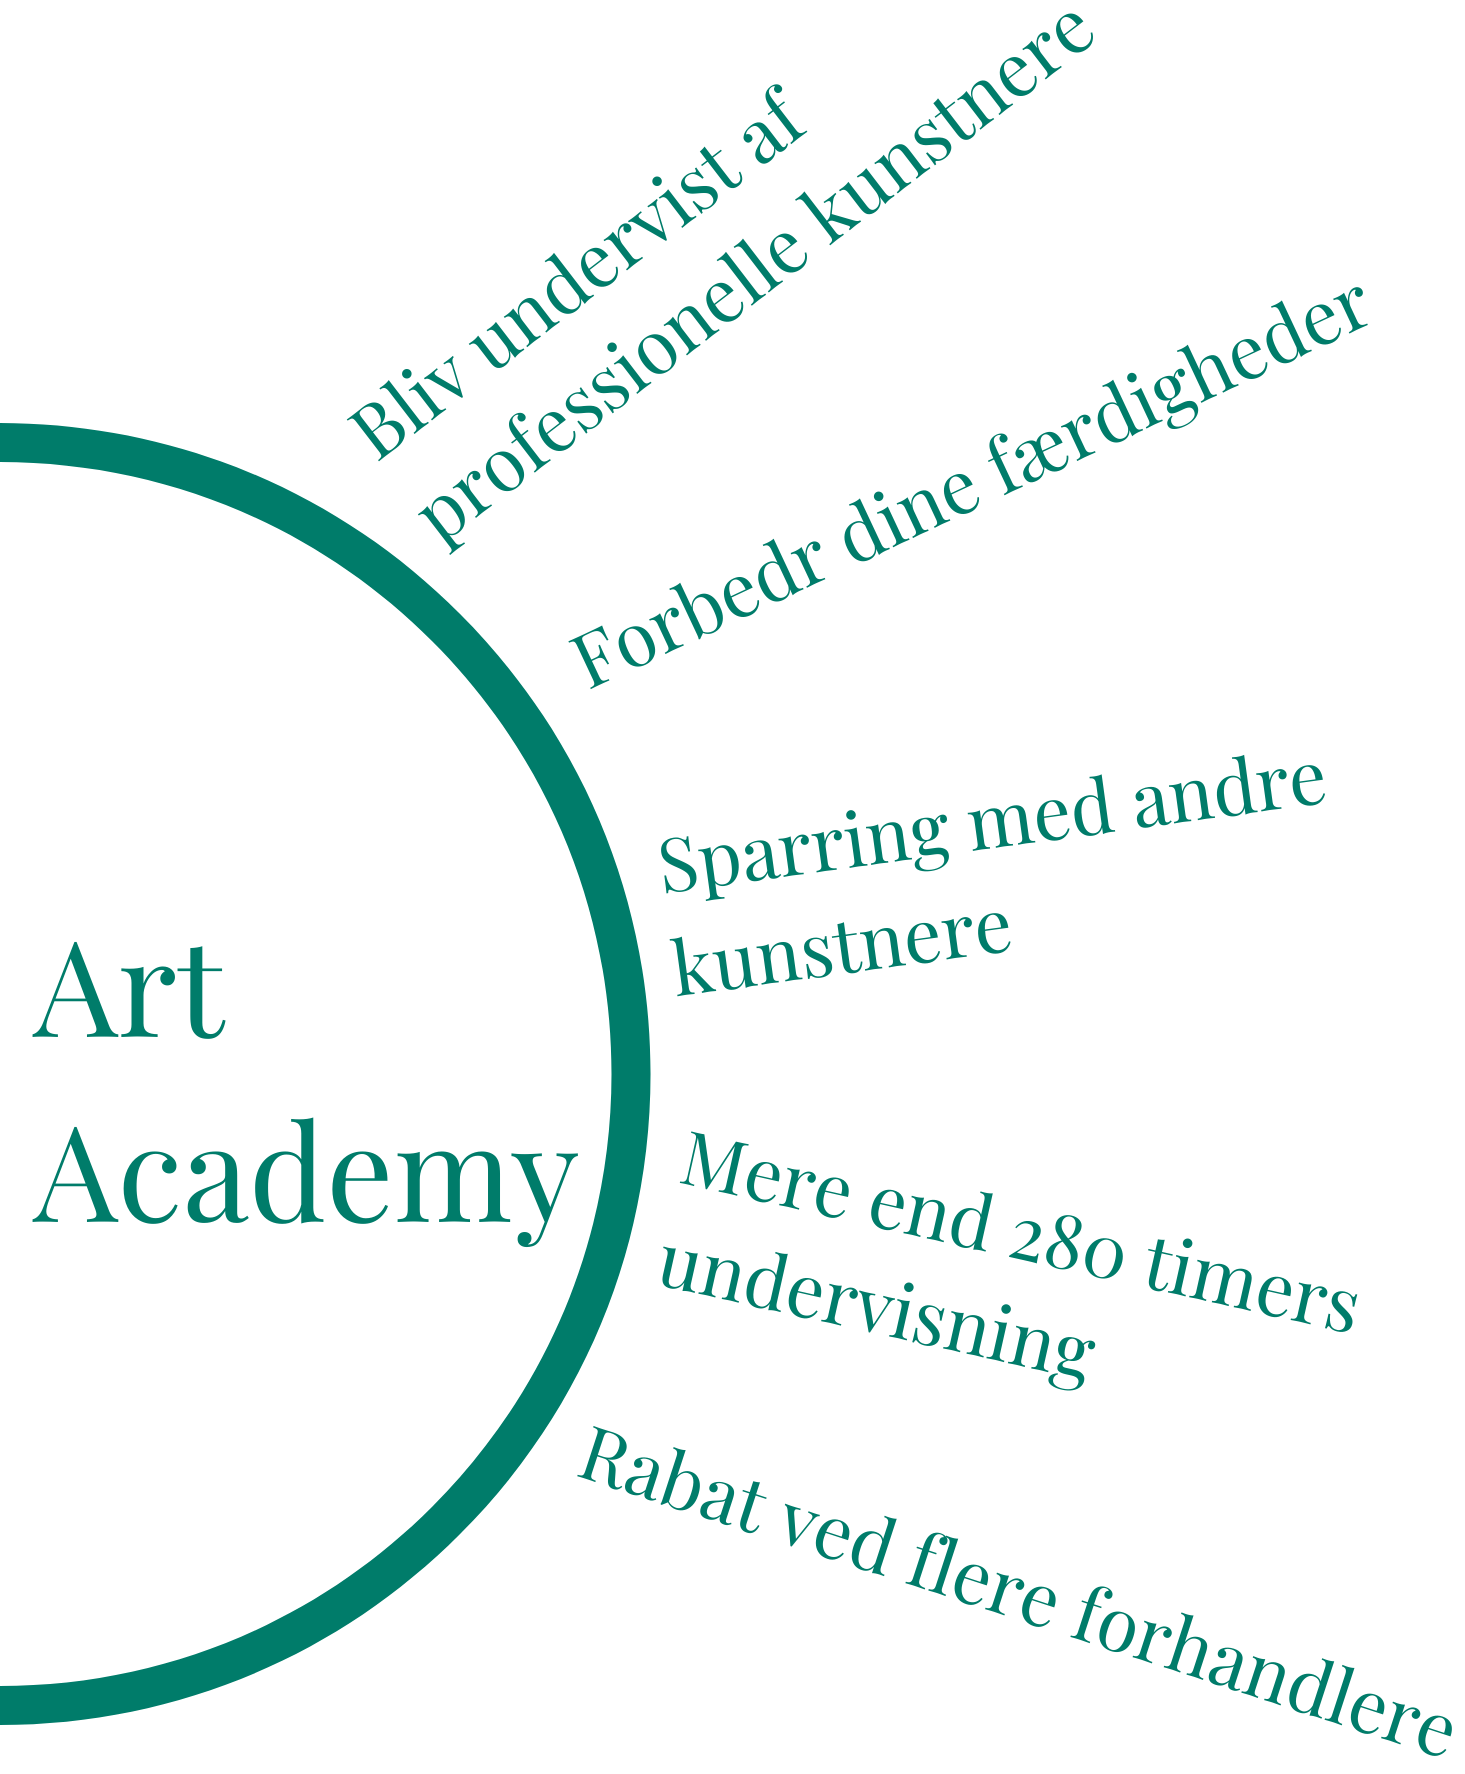 Art Academy - din online kunstskole